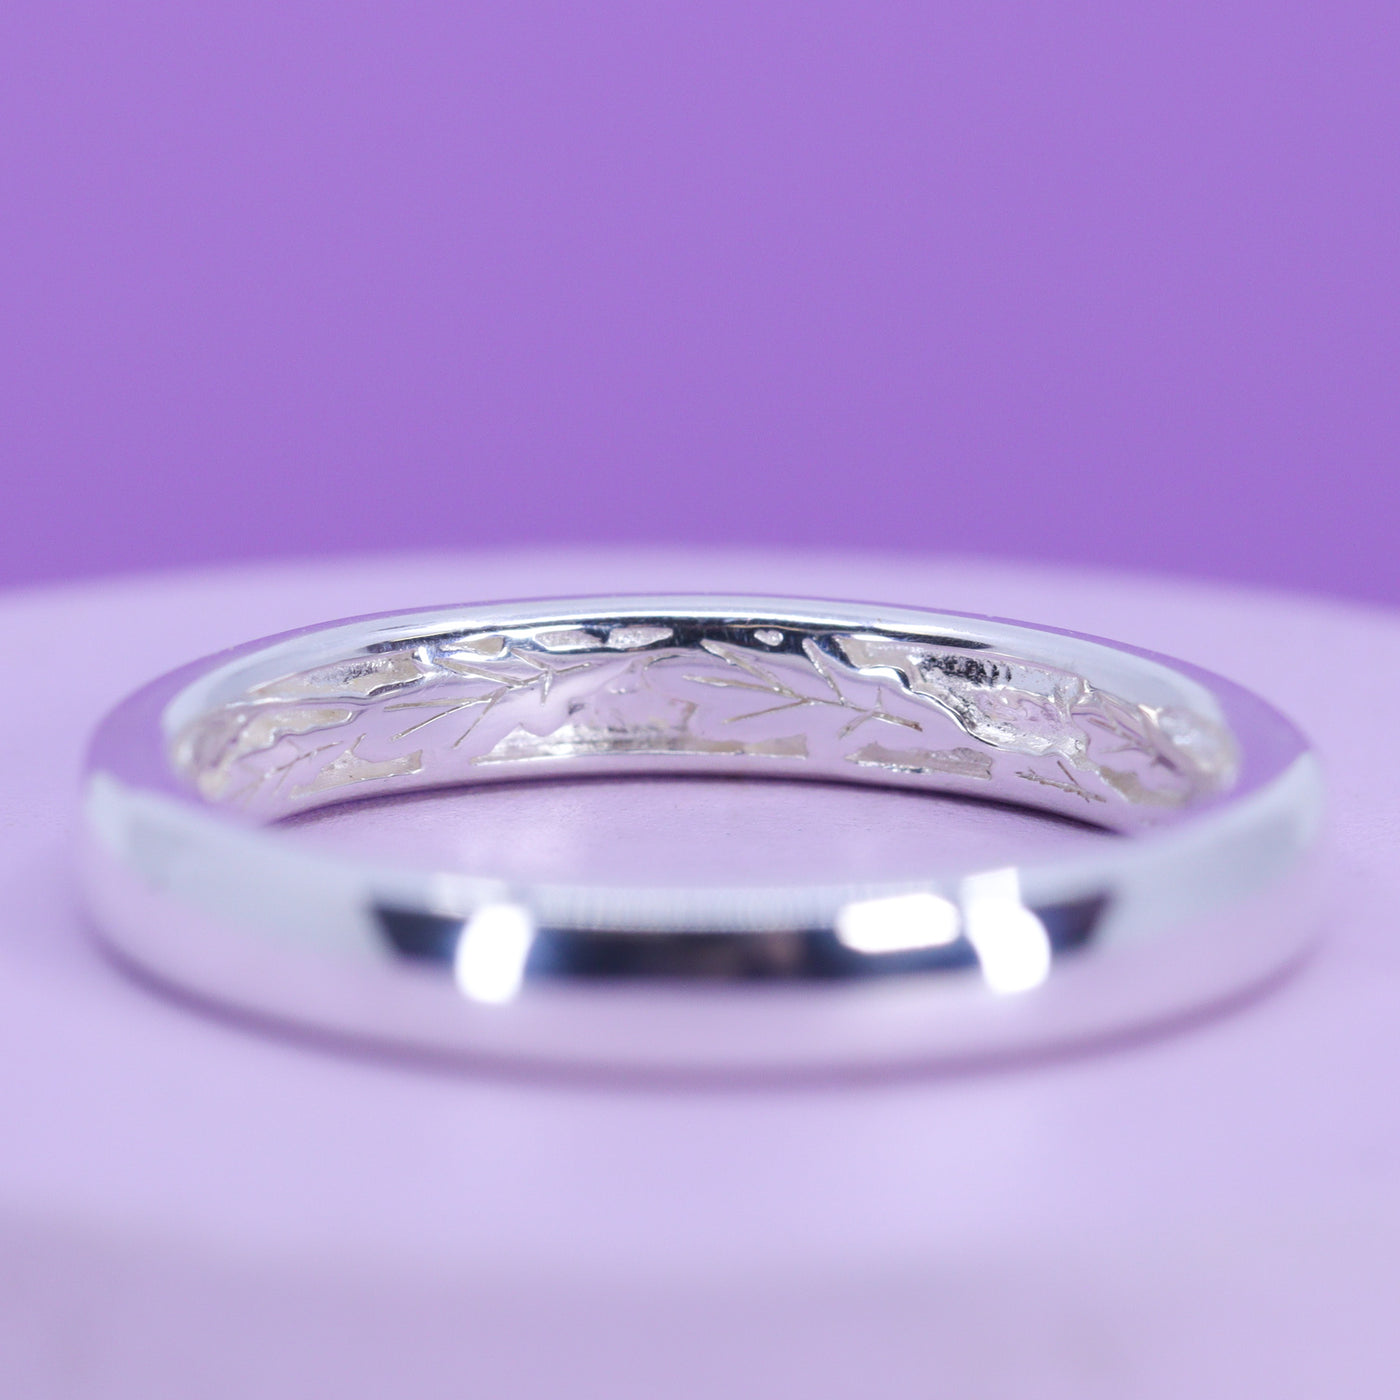 Xander - Slim Hidden Leaves Wedding Ring Mens (3mm wide) - Made-to-Order